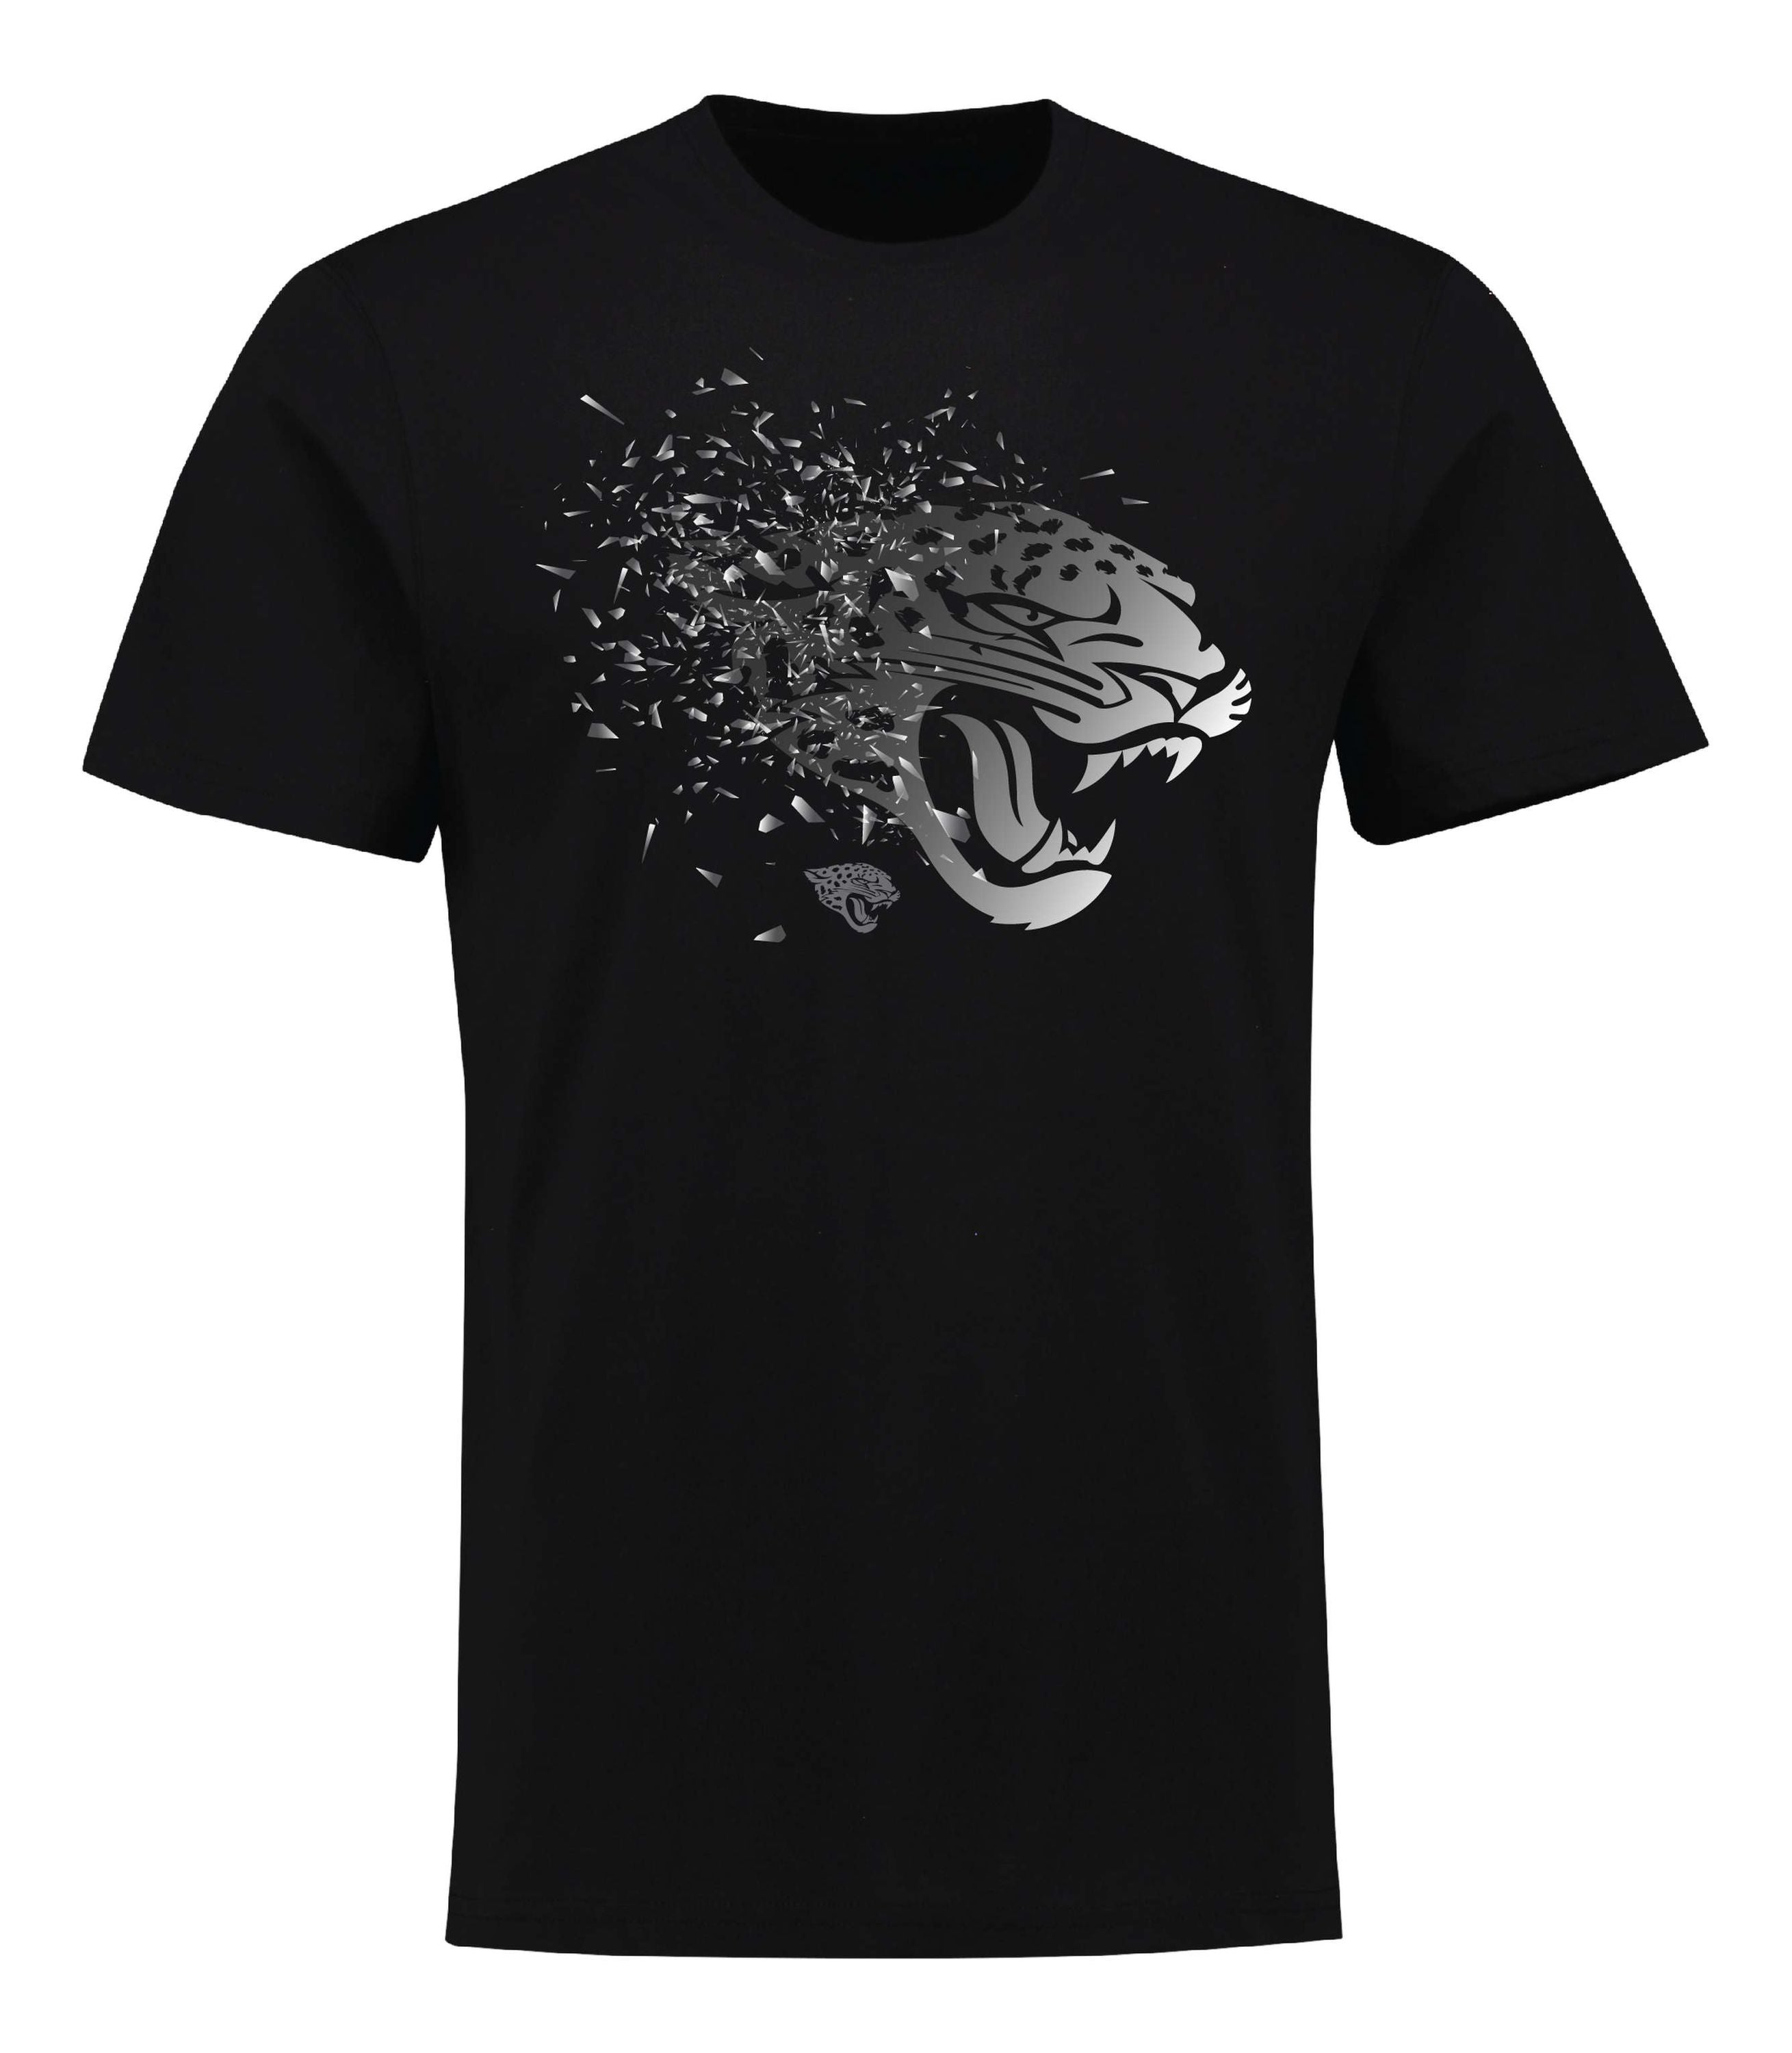 Fanatics - NFL Jacksonville Jaguars Shatter Graphic T-Shirt - Schwarz